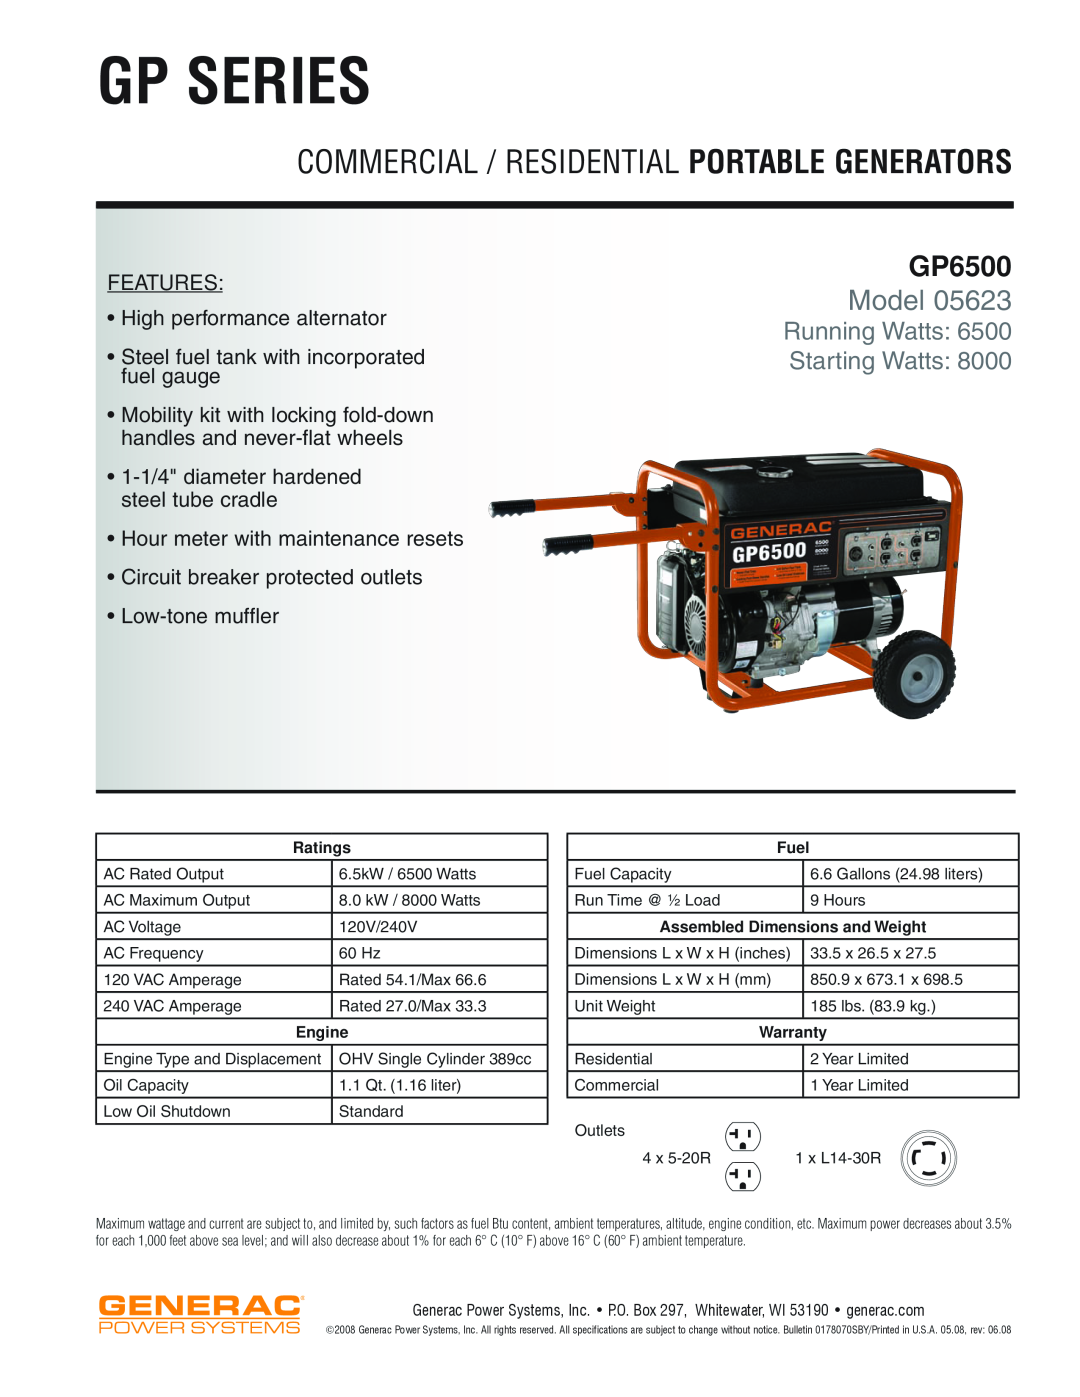 Generac Power Systems GP6500 dimensions Gp Series, Commercial / Residential Portable Generators, Model, Low-tonemuffler 